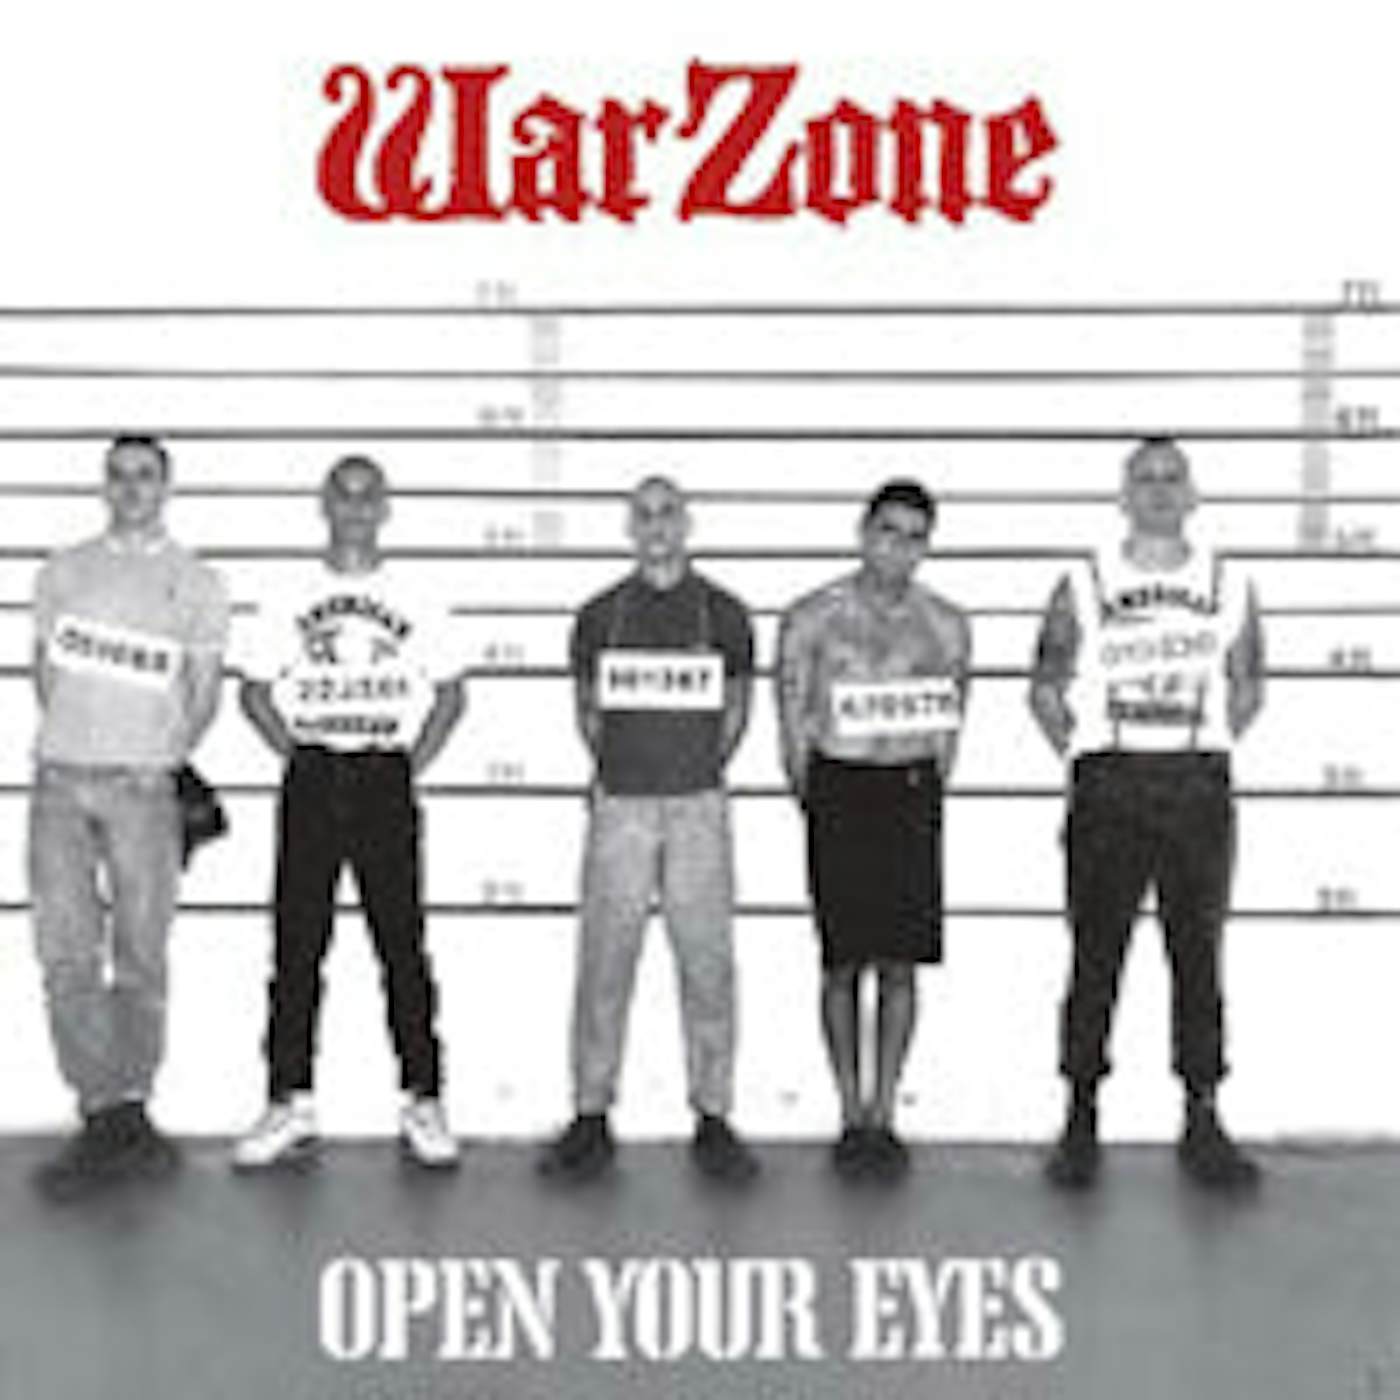 Warzone LP - Open Your Eyes (Vinyl)